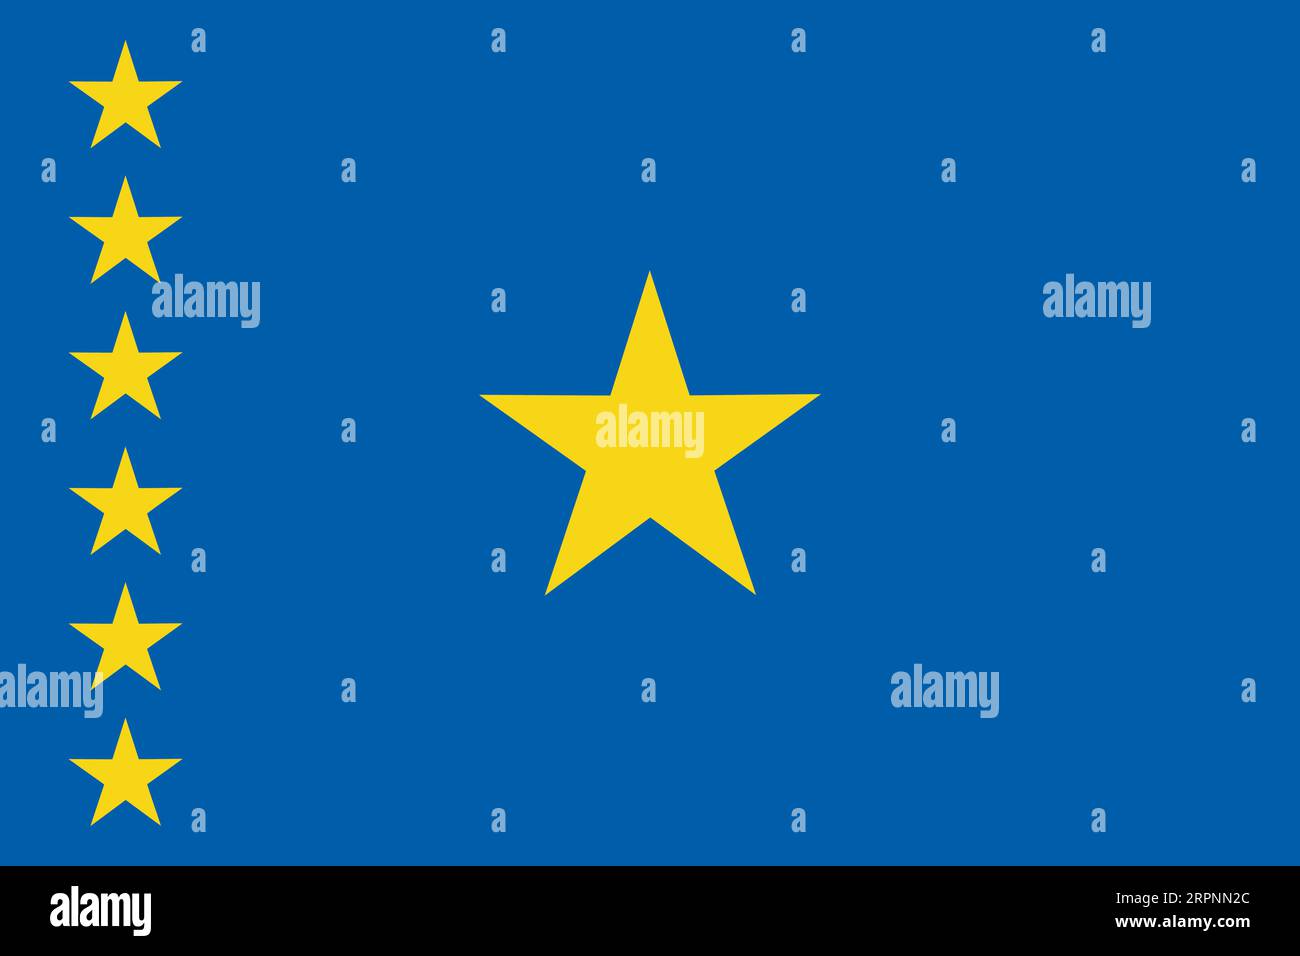 Democratic Congo flag national emblem graphic element Illustration template design Stock Vector